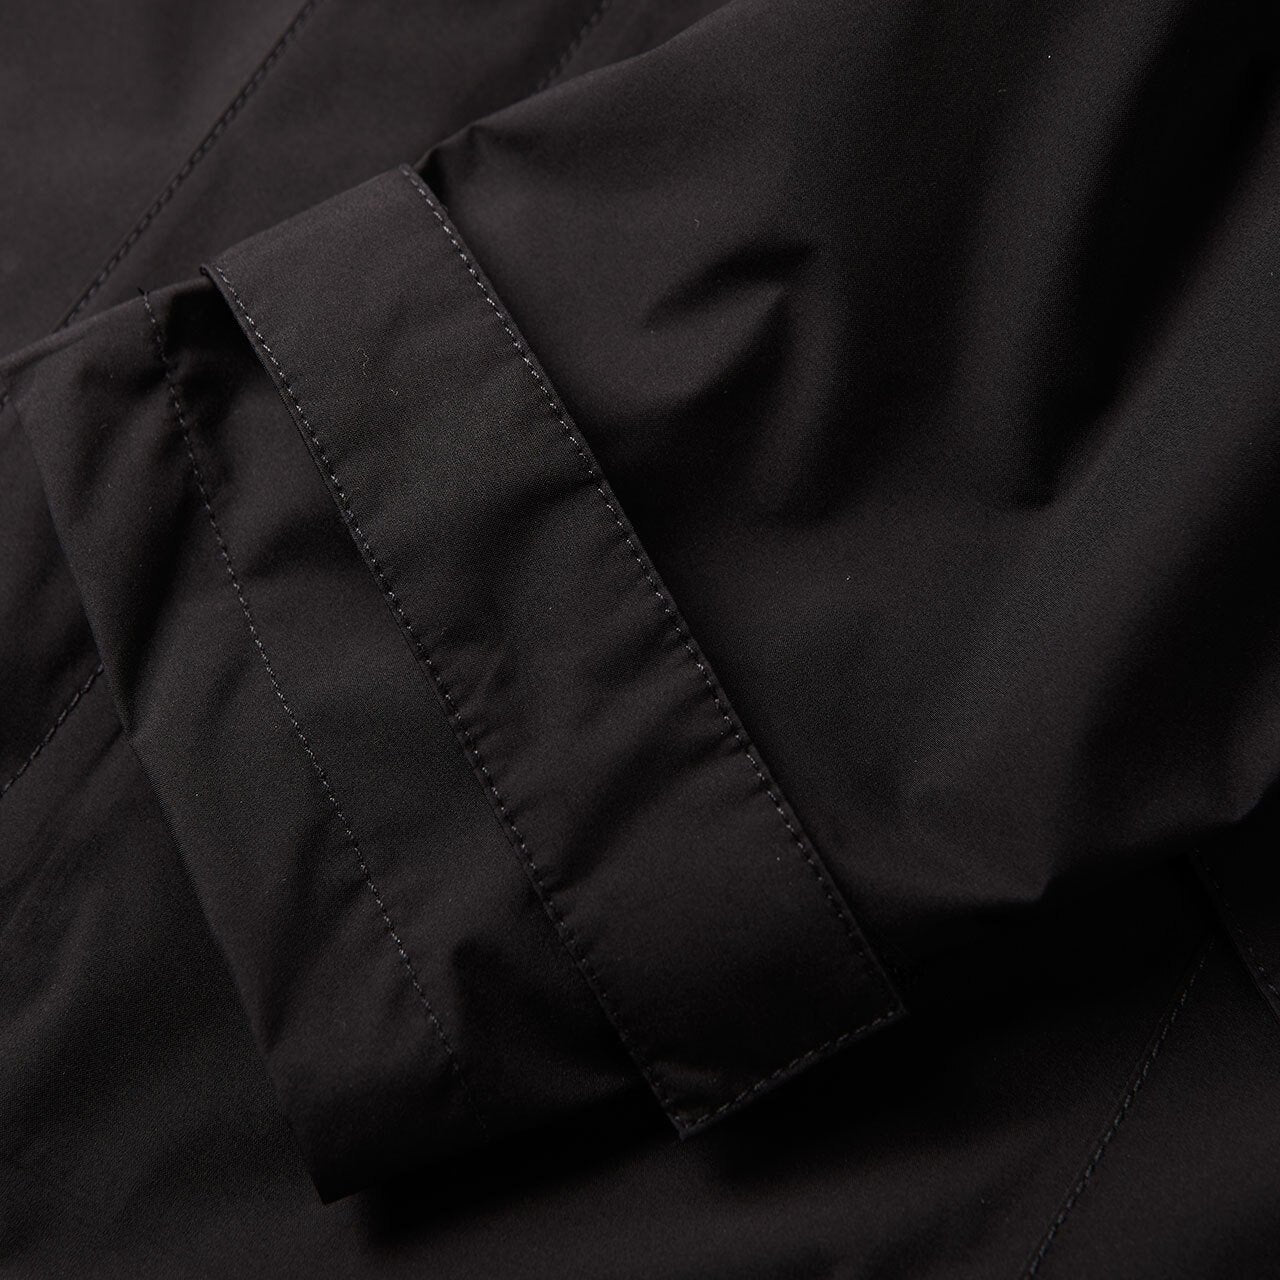 stone island shadow project goretex paclite jacket (black)